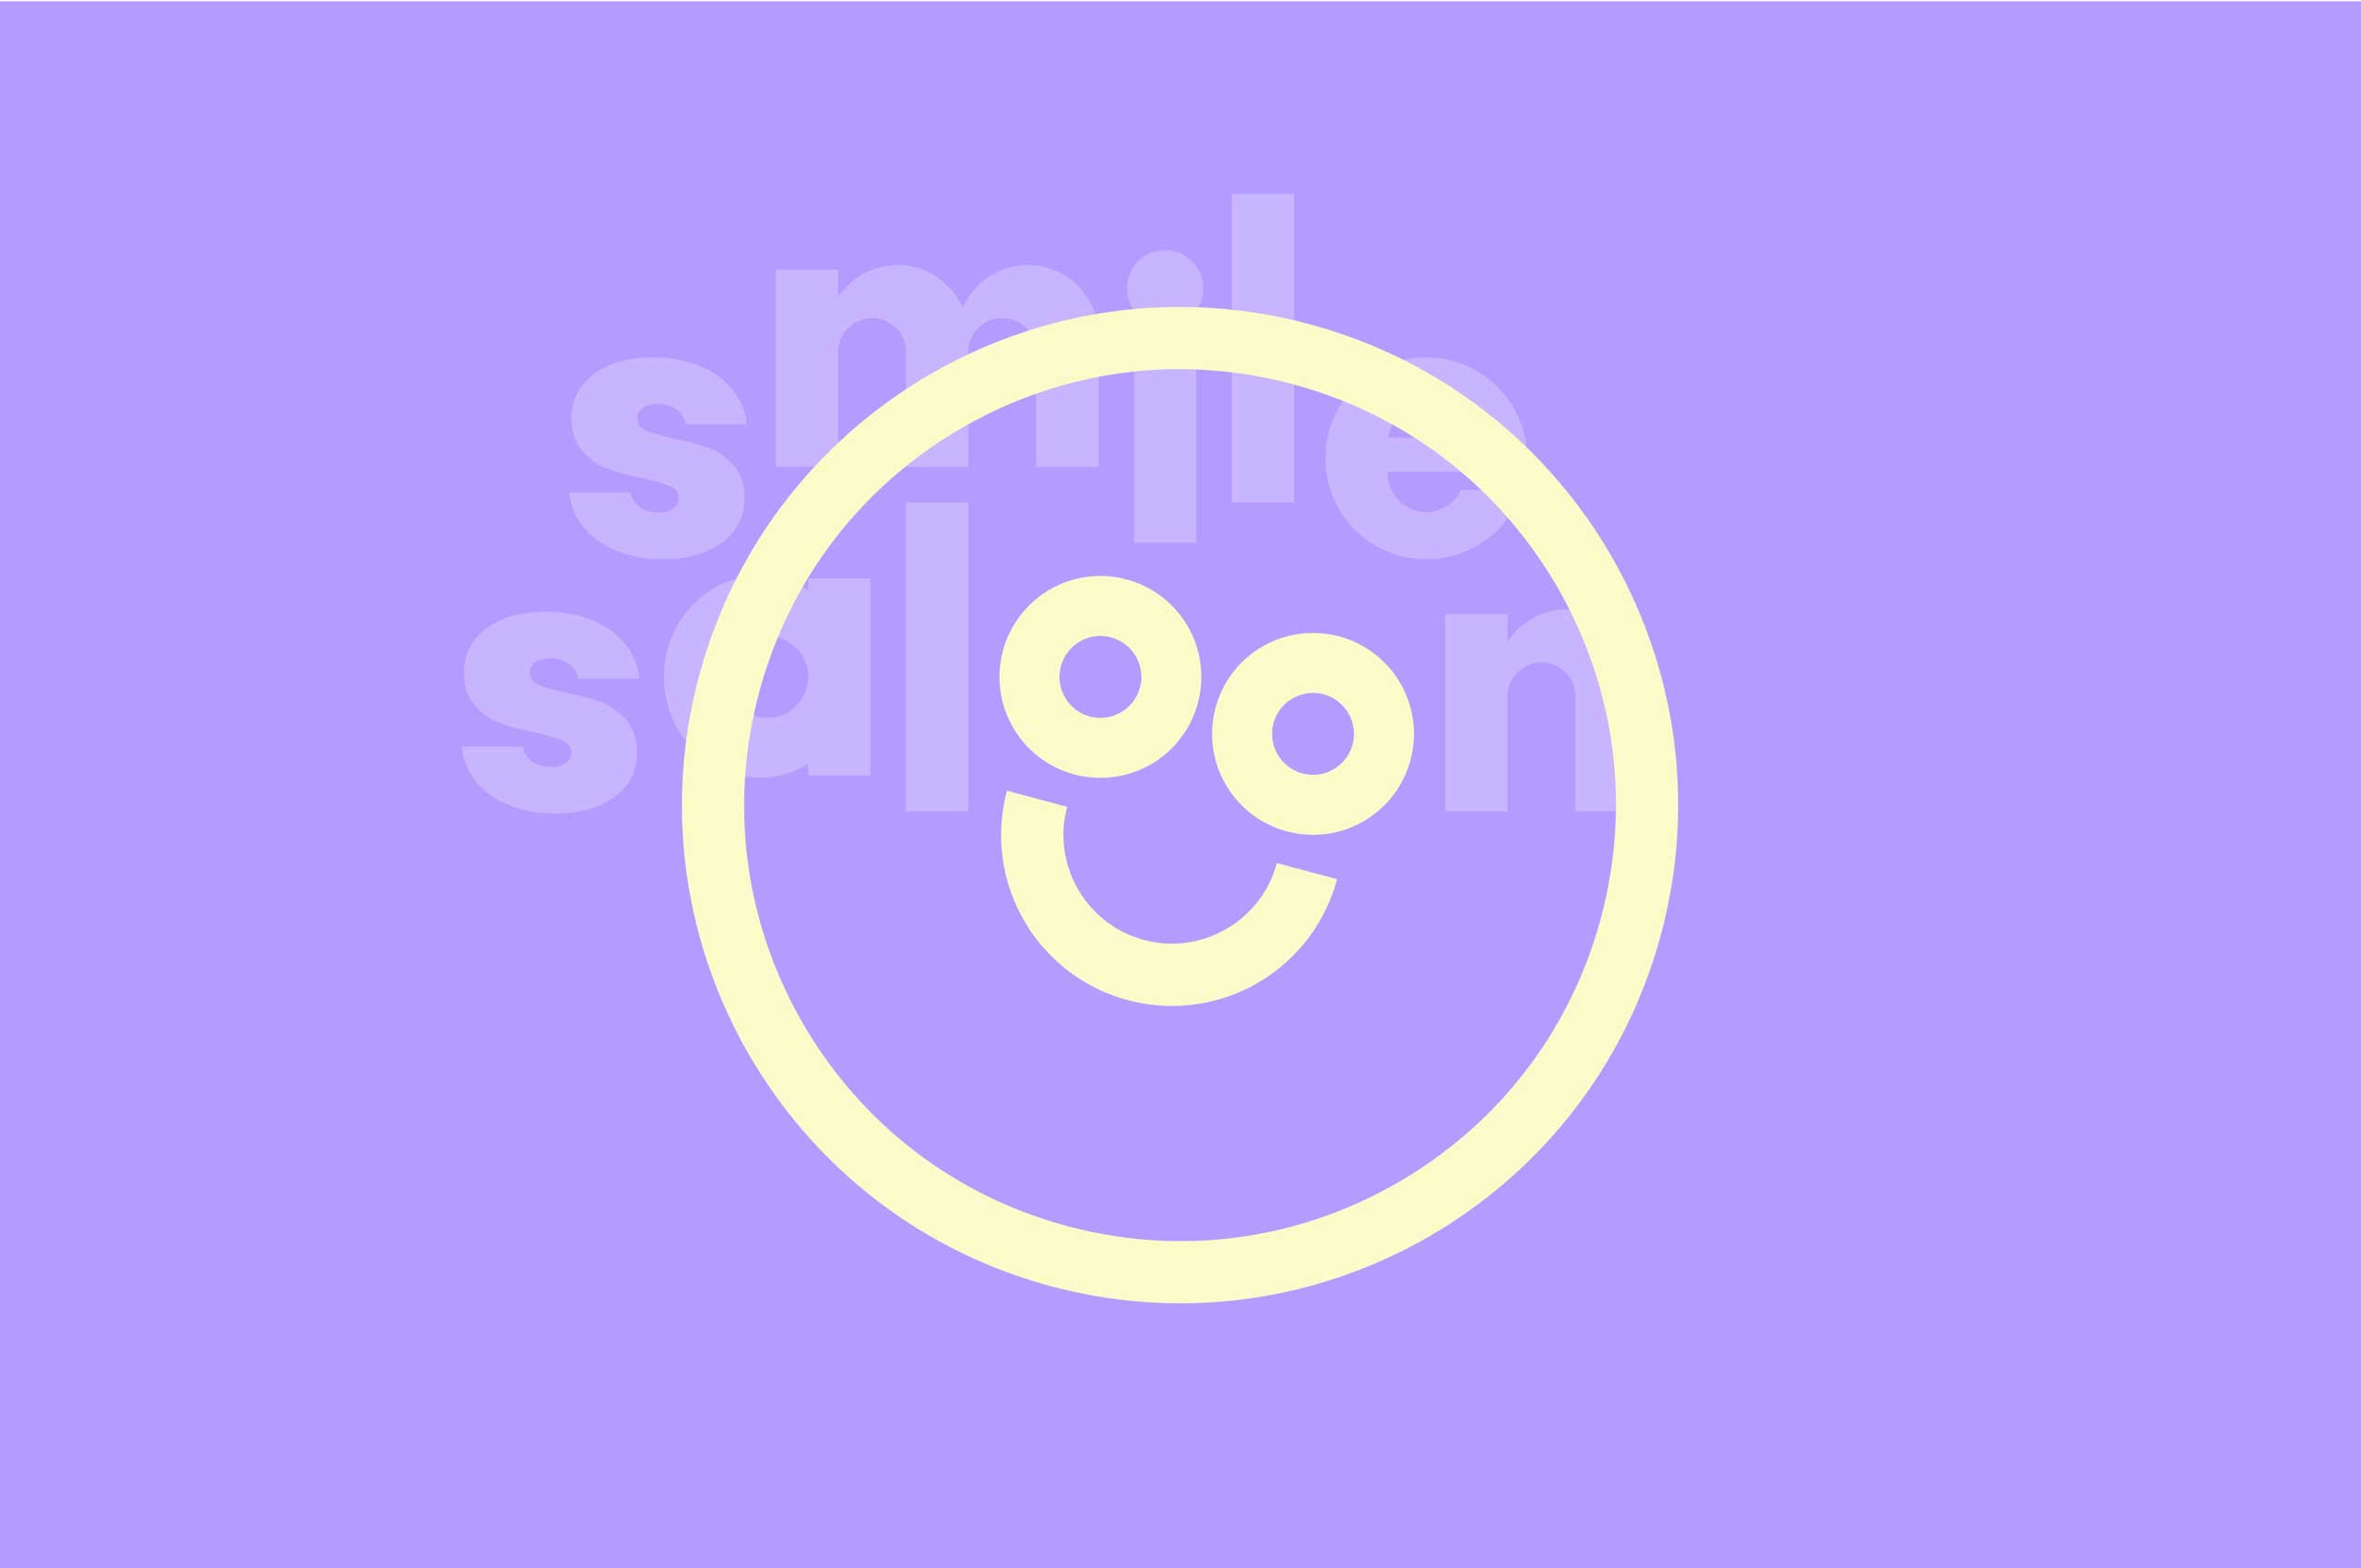 TheSmileSafari_Branding-LexTurner-Flags-smilesaloon-smiley